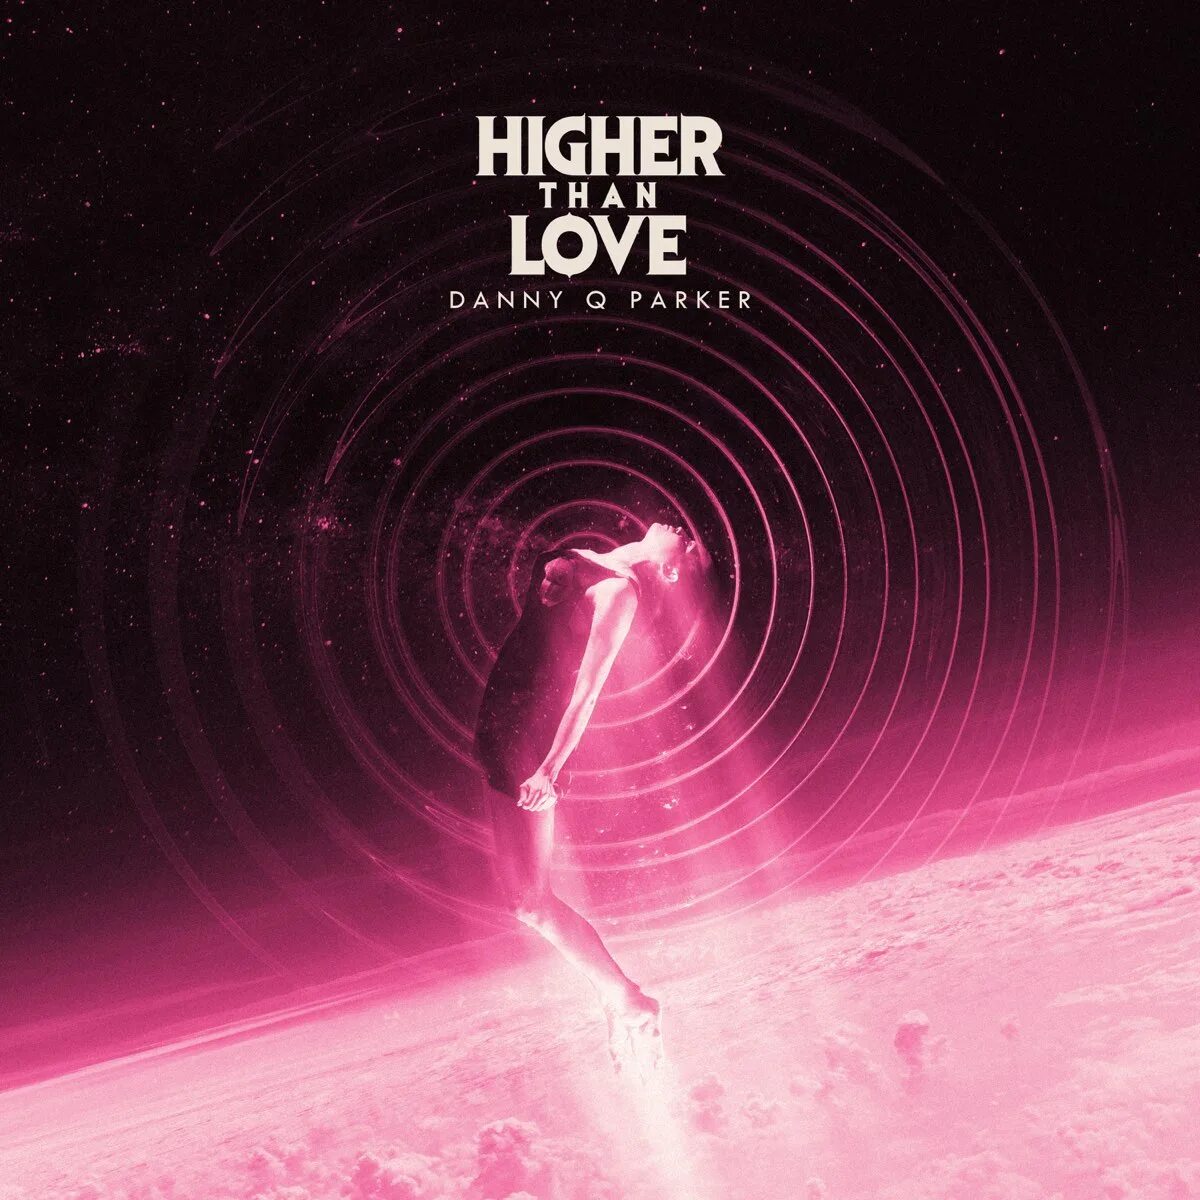 Danny Love. High Love. Higher песня. Than Love. High and higher песня